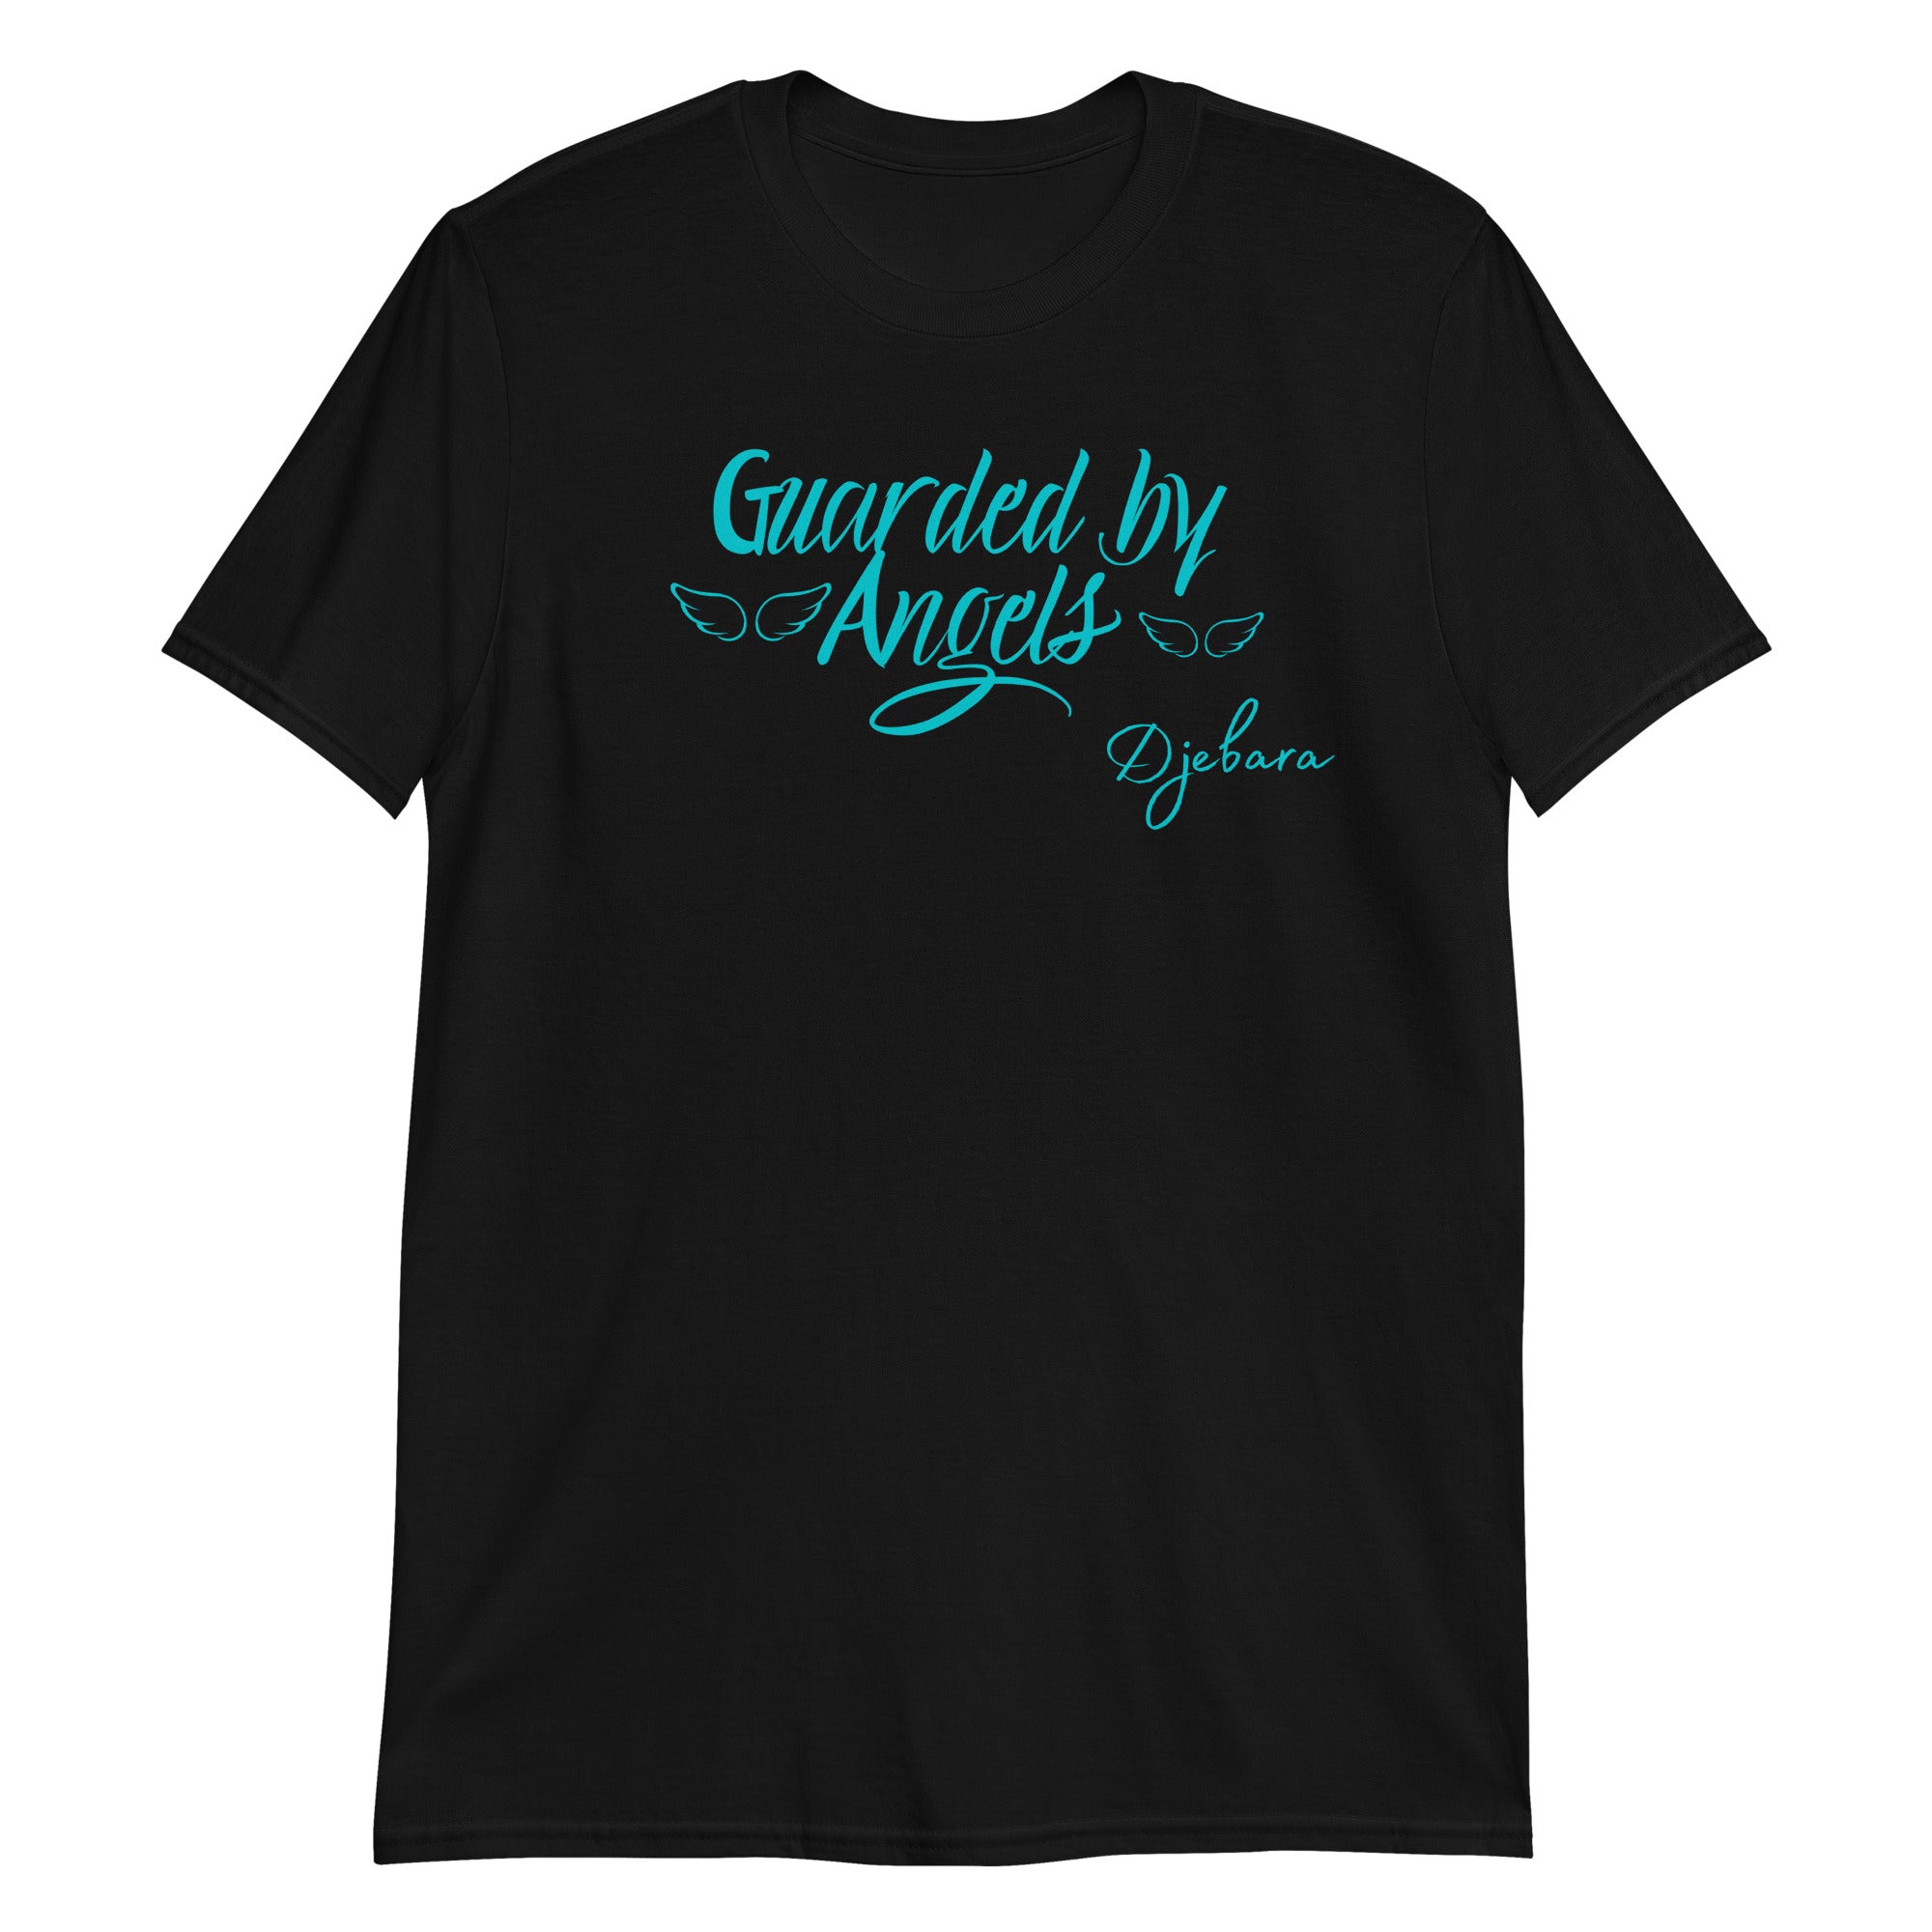 Black Guarded by Angels Short-Sleeve Gildan Unisex T-Shirt (T-Wings) S-3XL